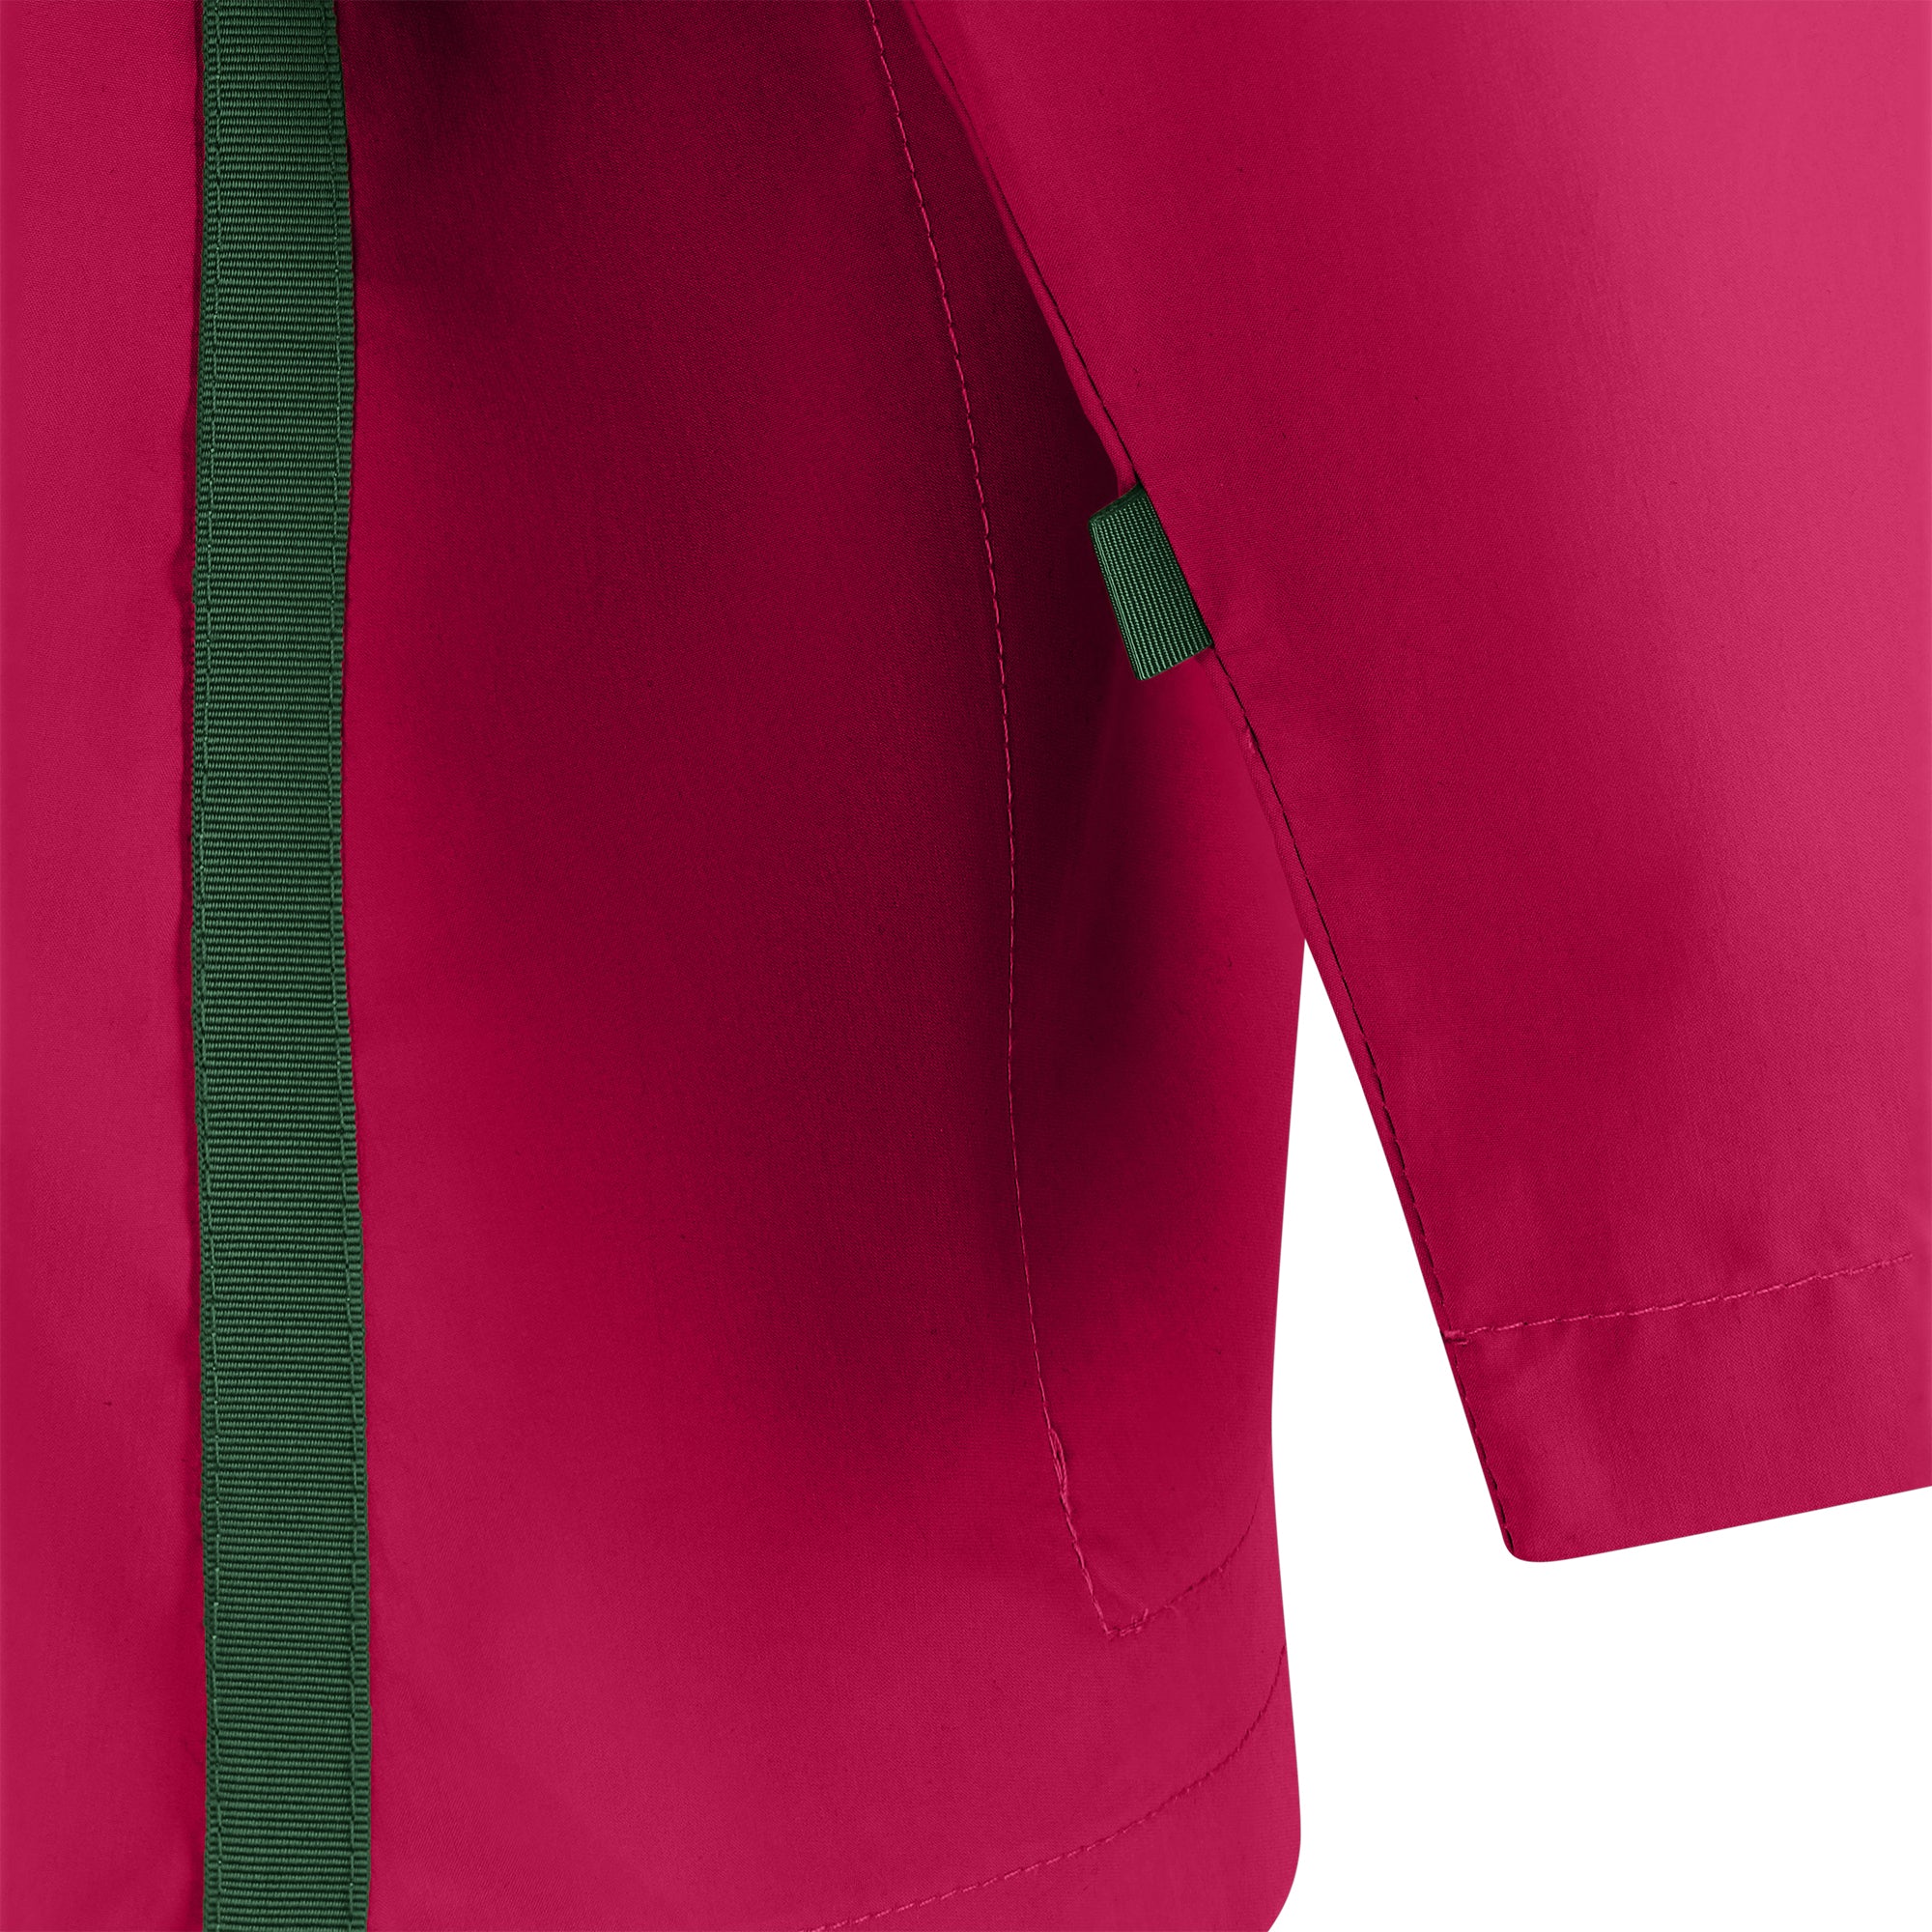 Bise raincoat - Cherry color - sleeve detail